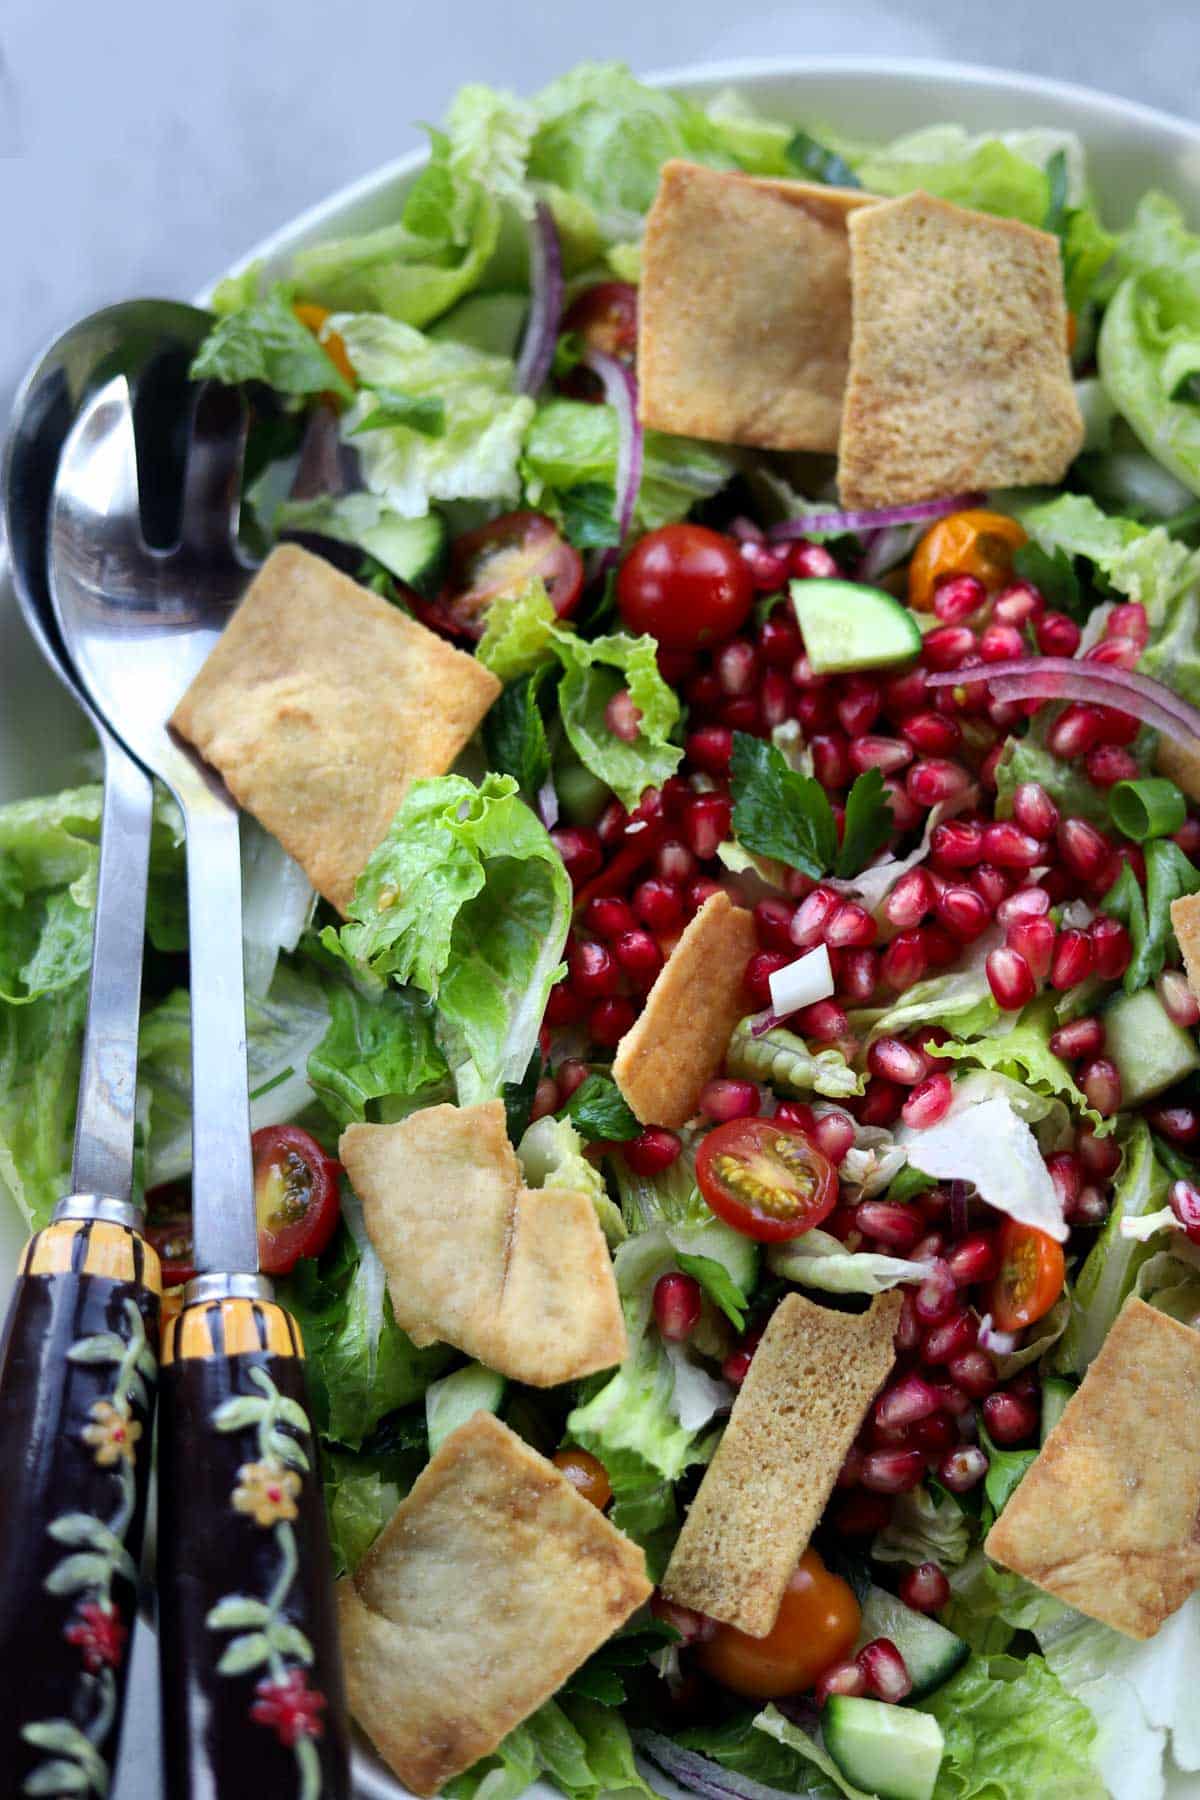 Lebanese fattoush salad